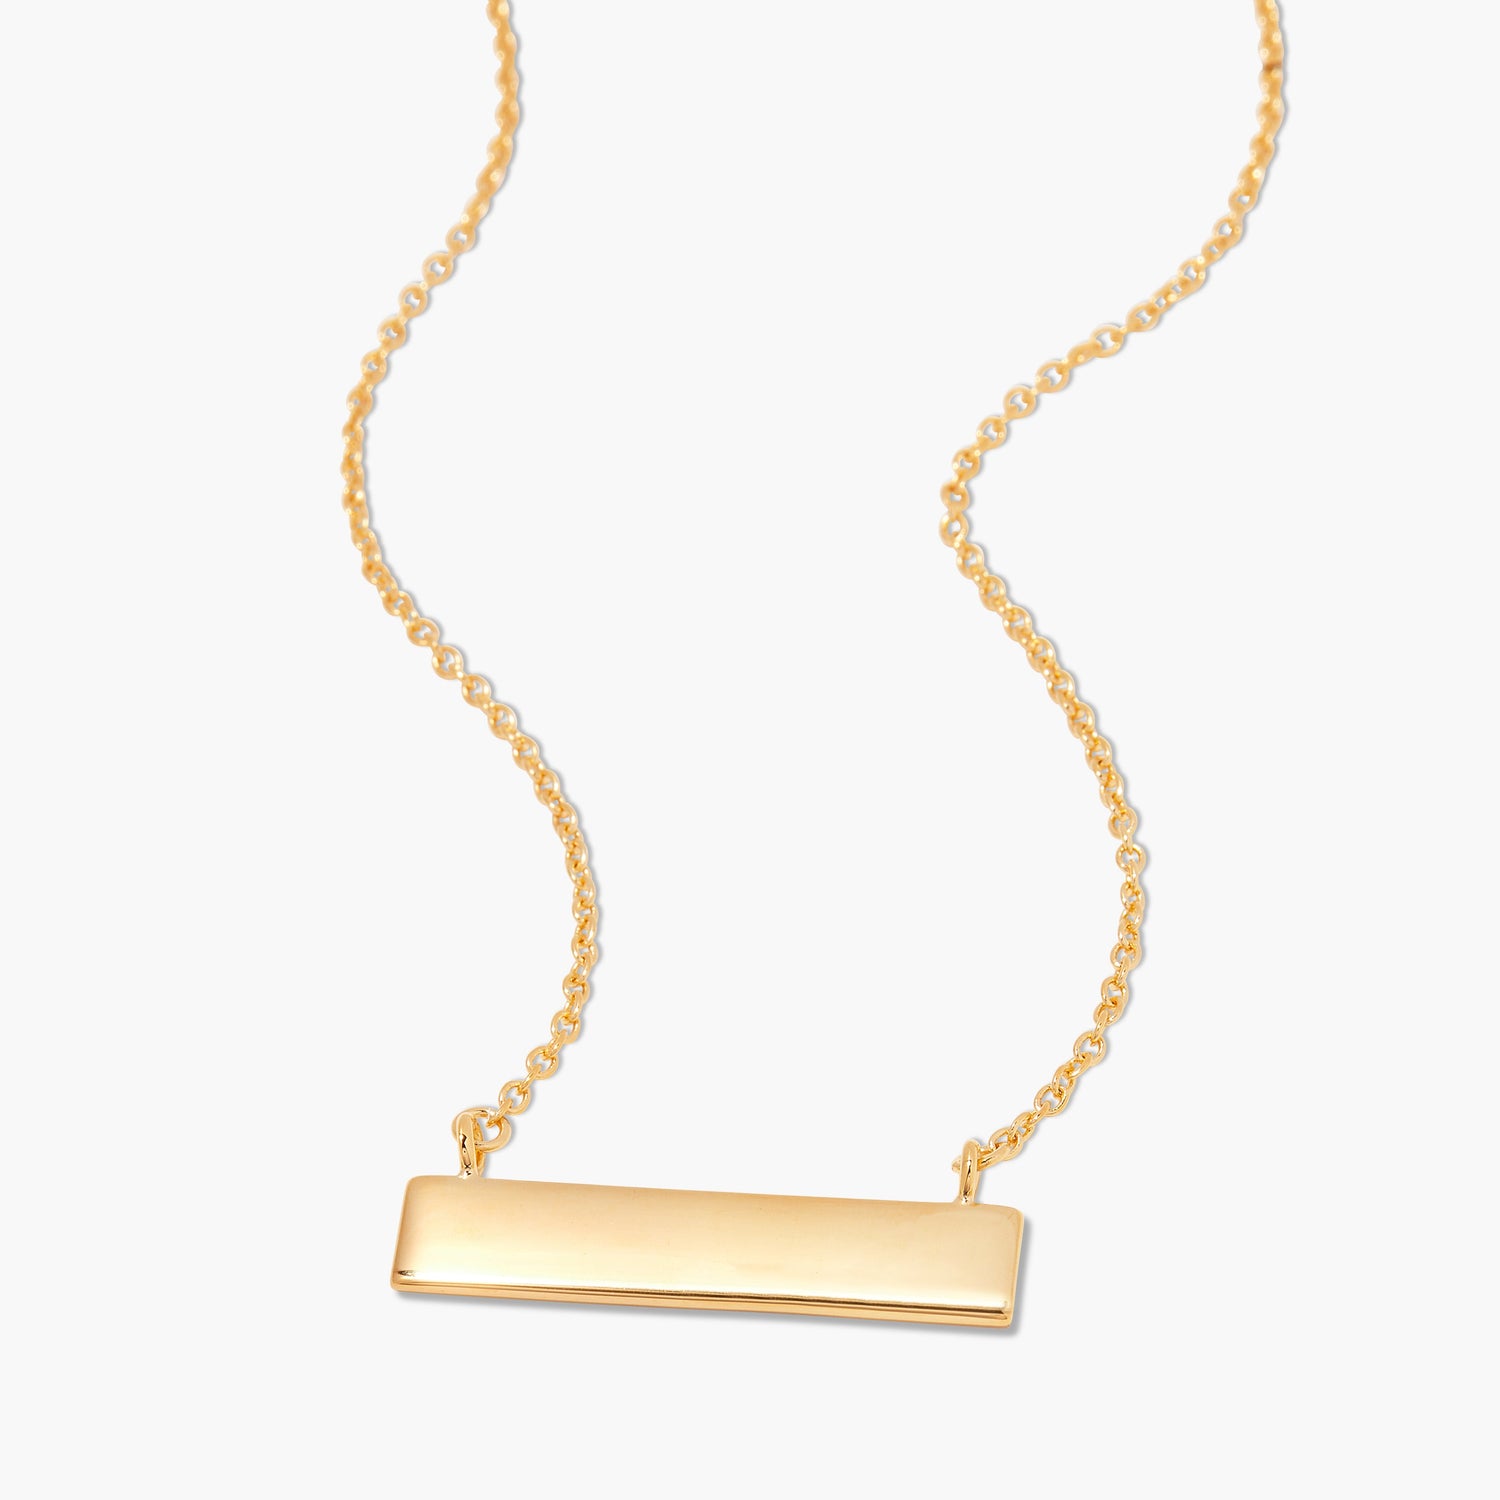 solid gold pendant for women, 14K gold pendant, bar necklace for women, solid gold pendant